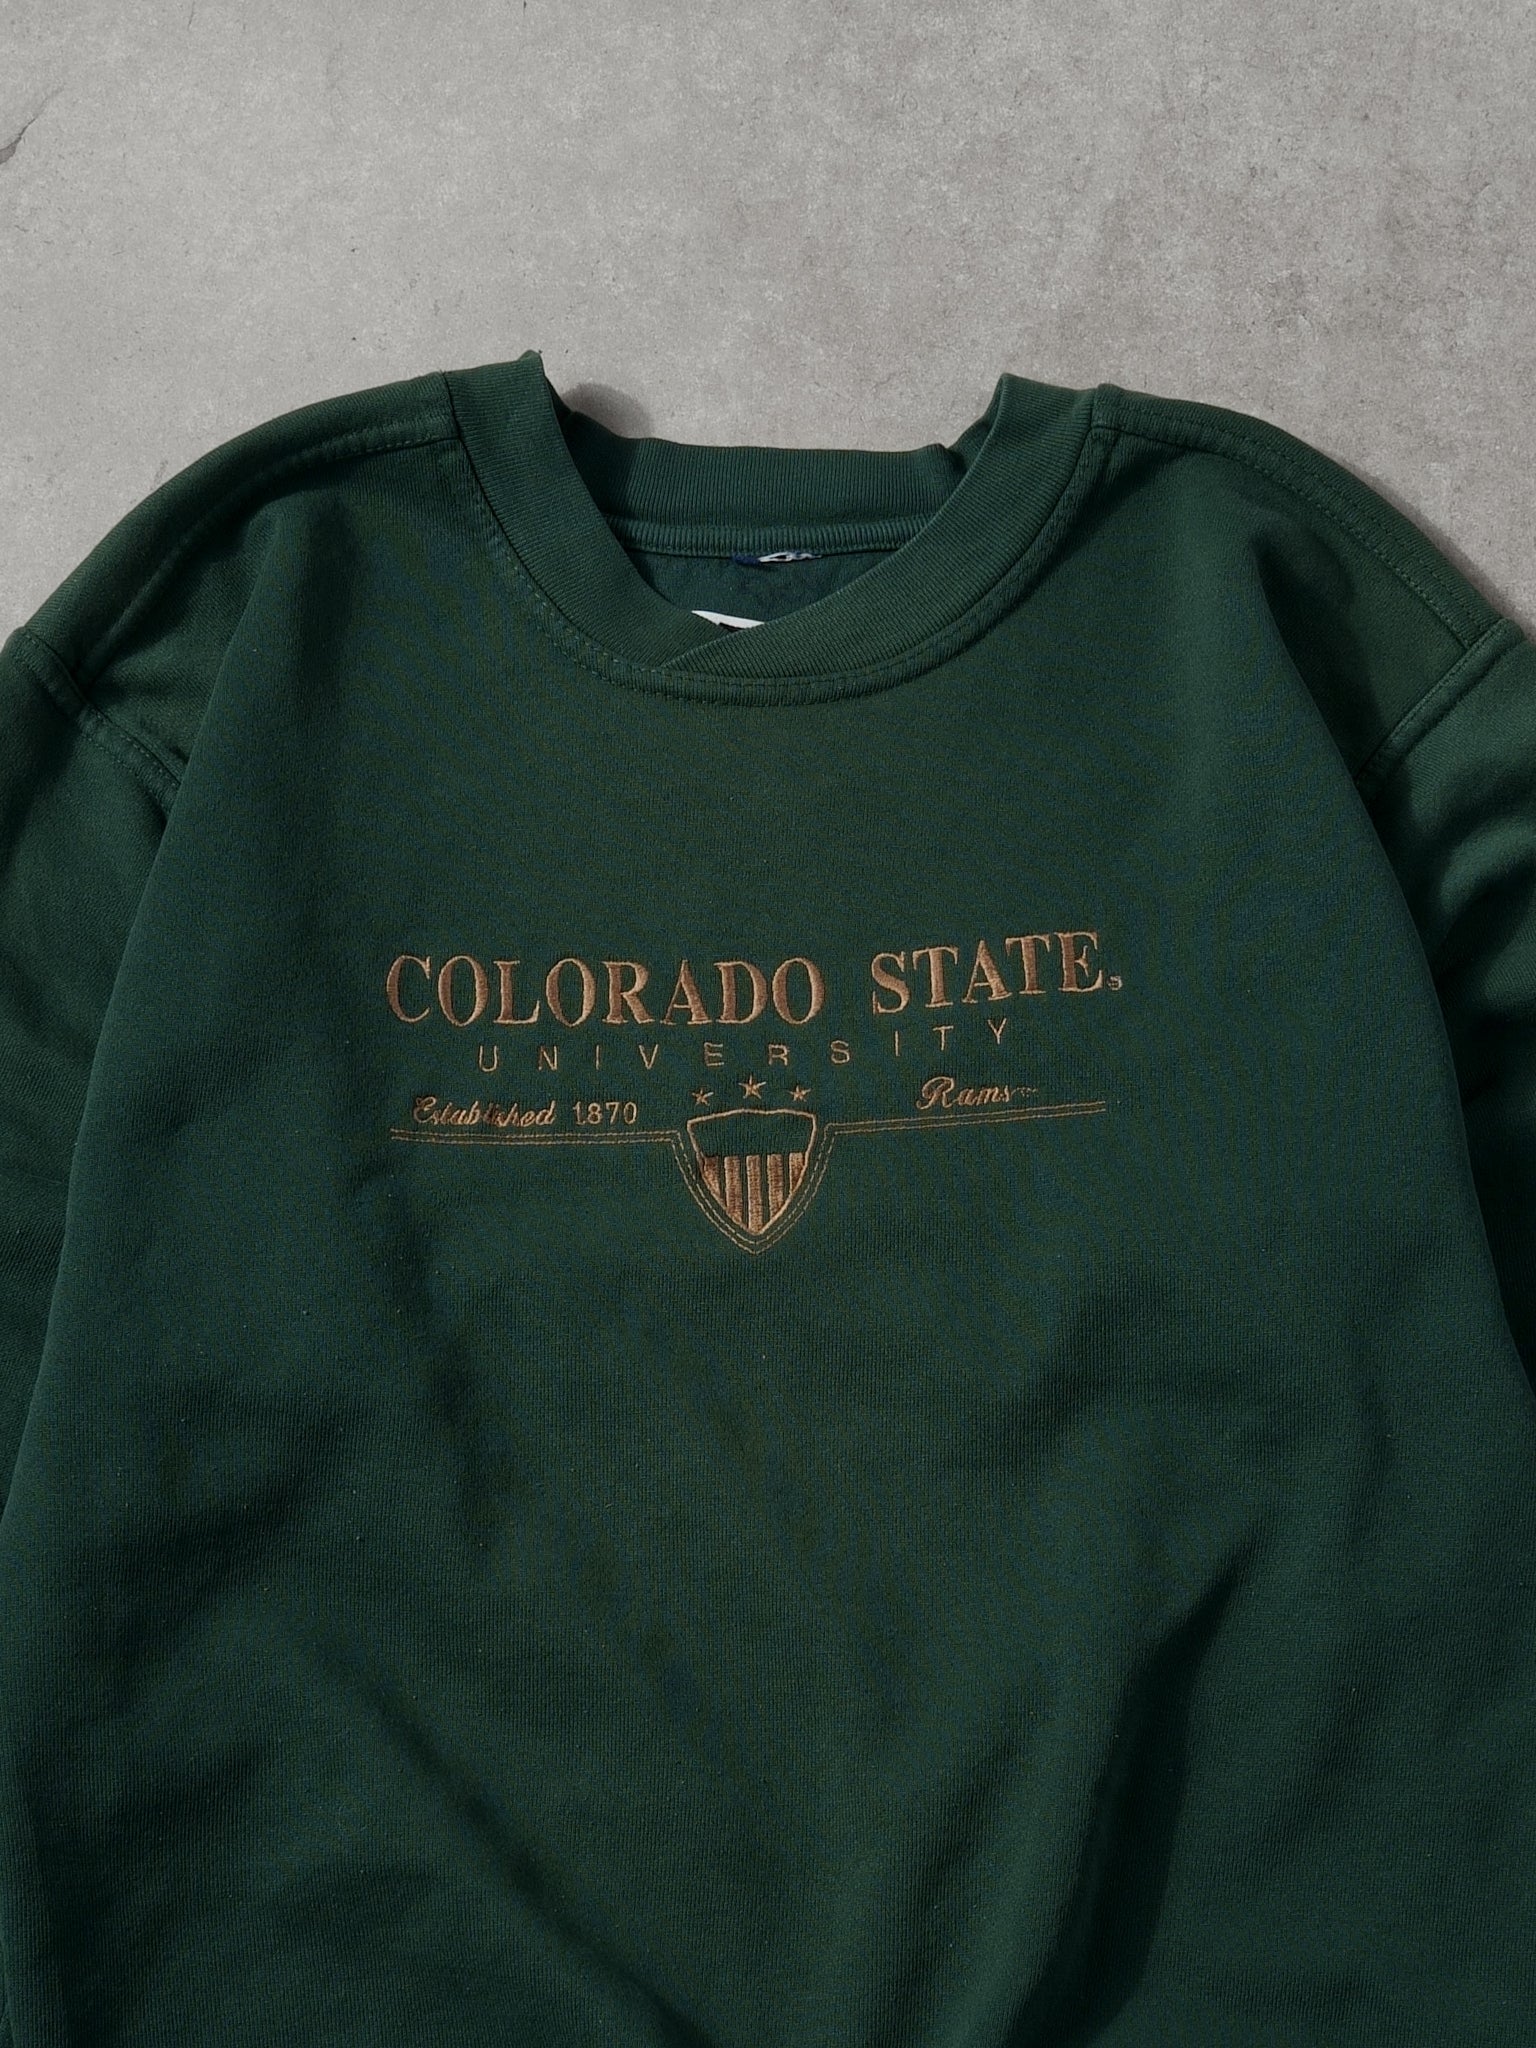 Vintage 90s Pine Green Colorado State University Crewneck (M)